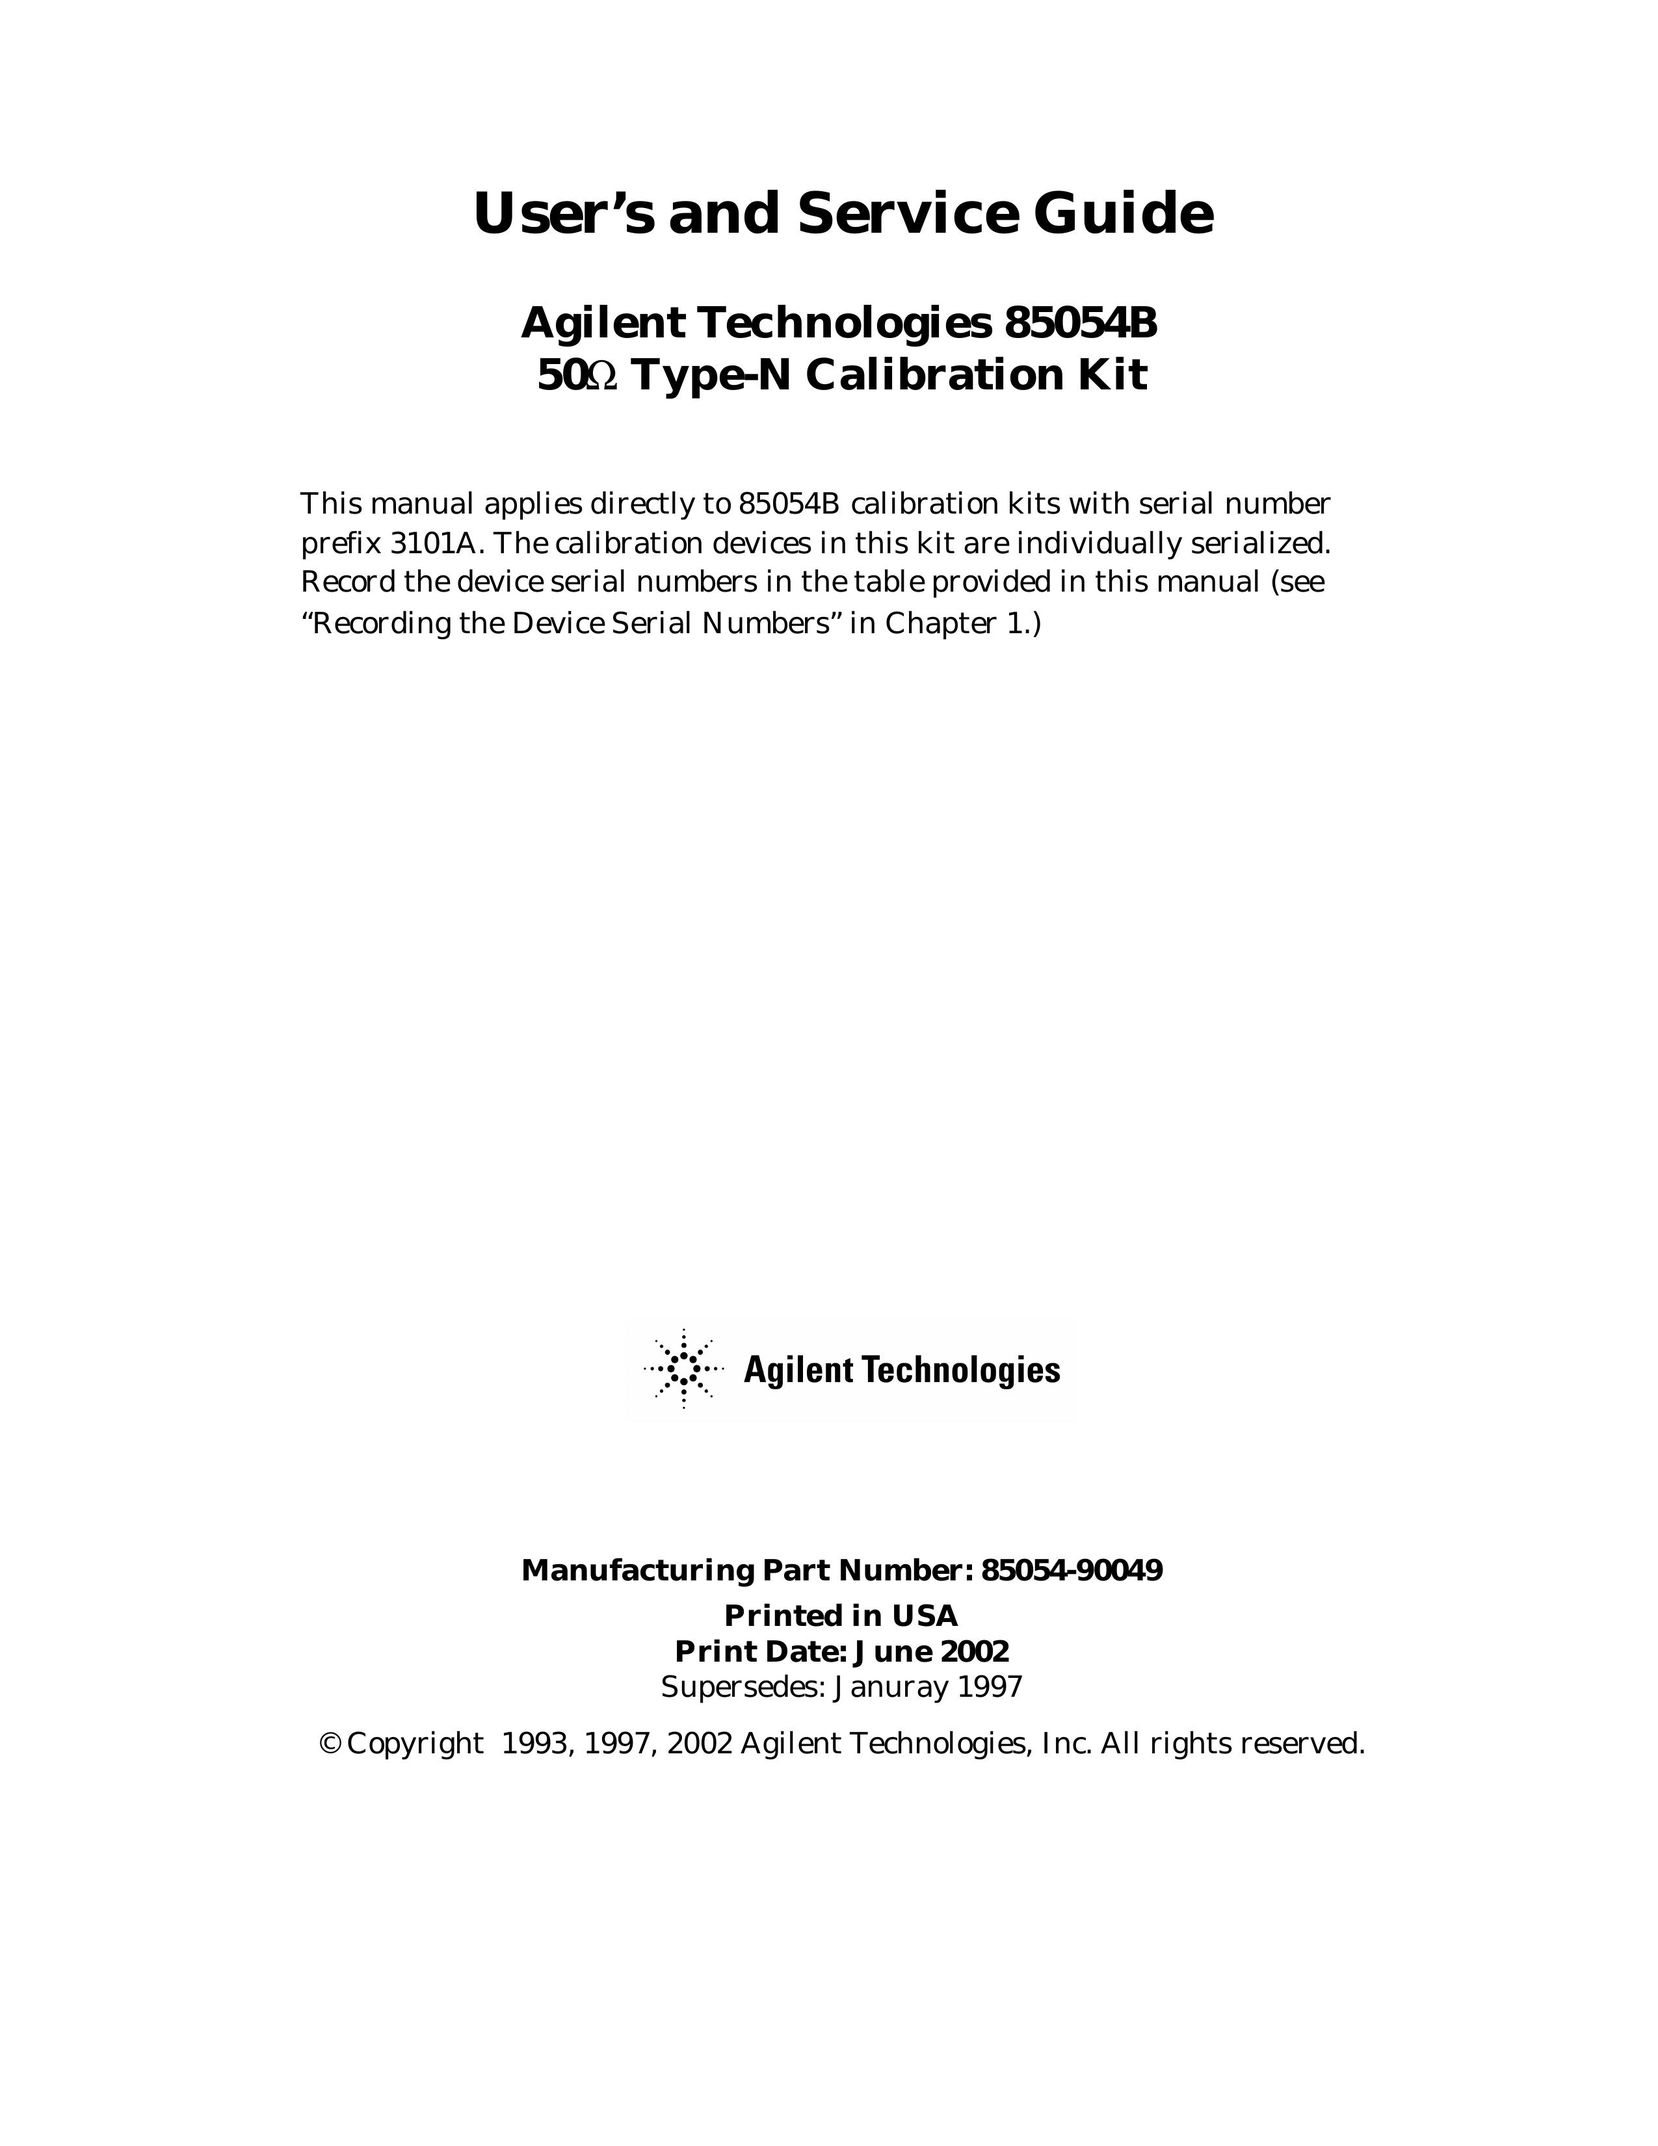 Agilent Technologies 85054-90049 Work Light User Manual